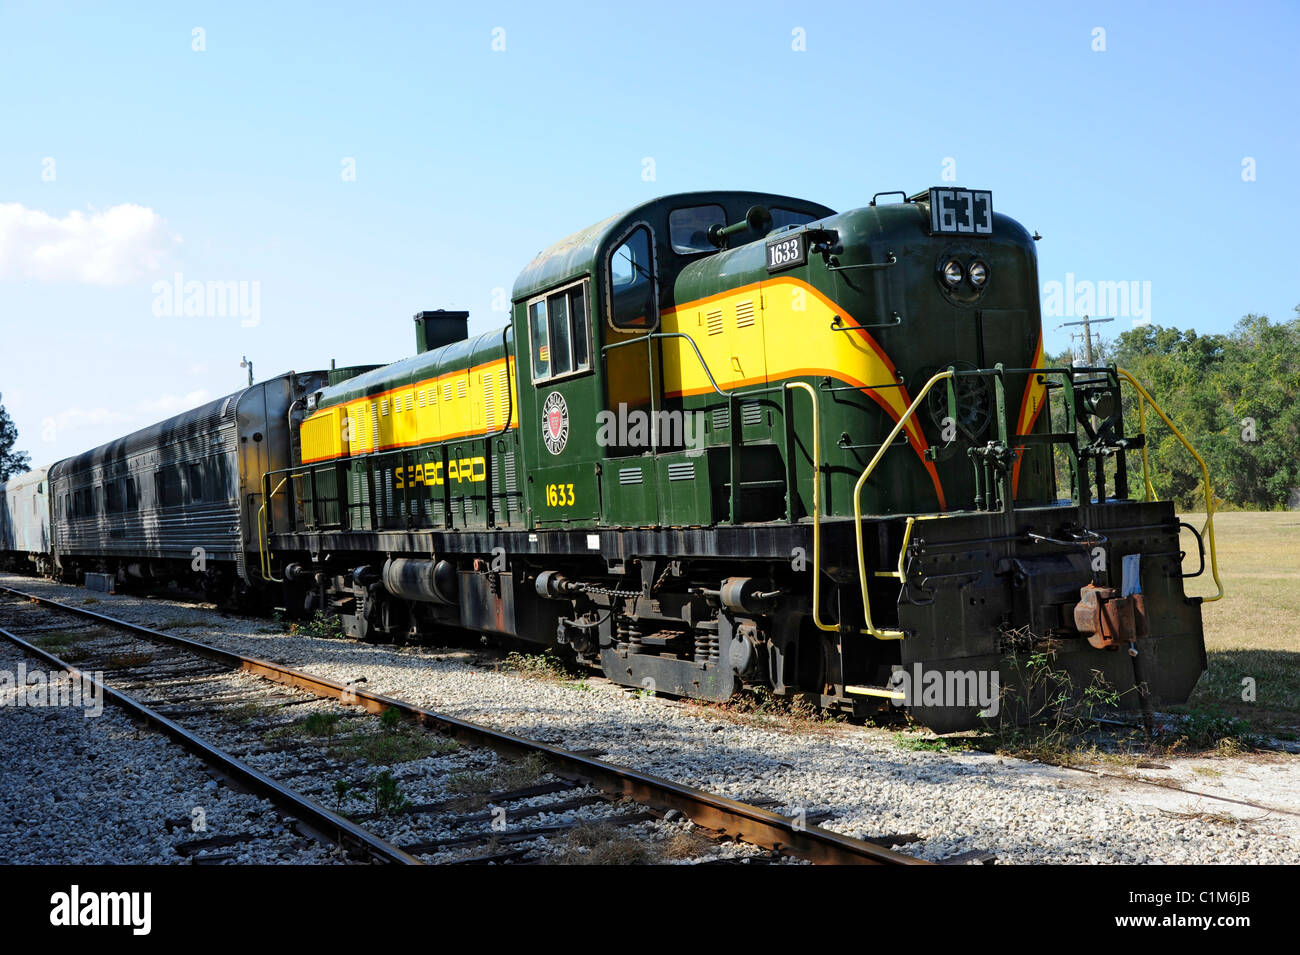 Seaboard diesel locomotive train 1633 Florida Railroad Museum Parrish Florida Stock Photo